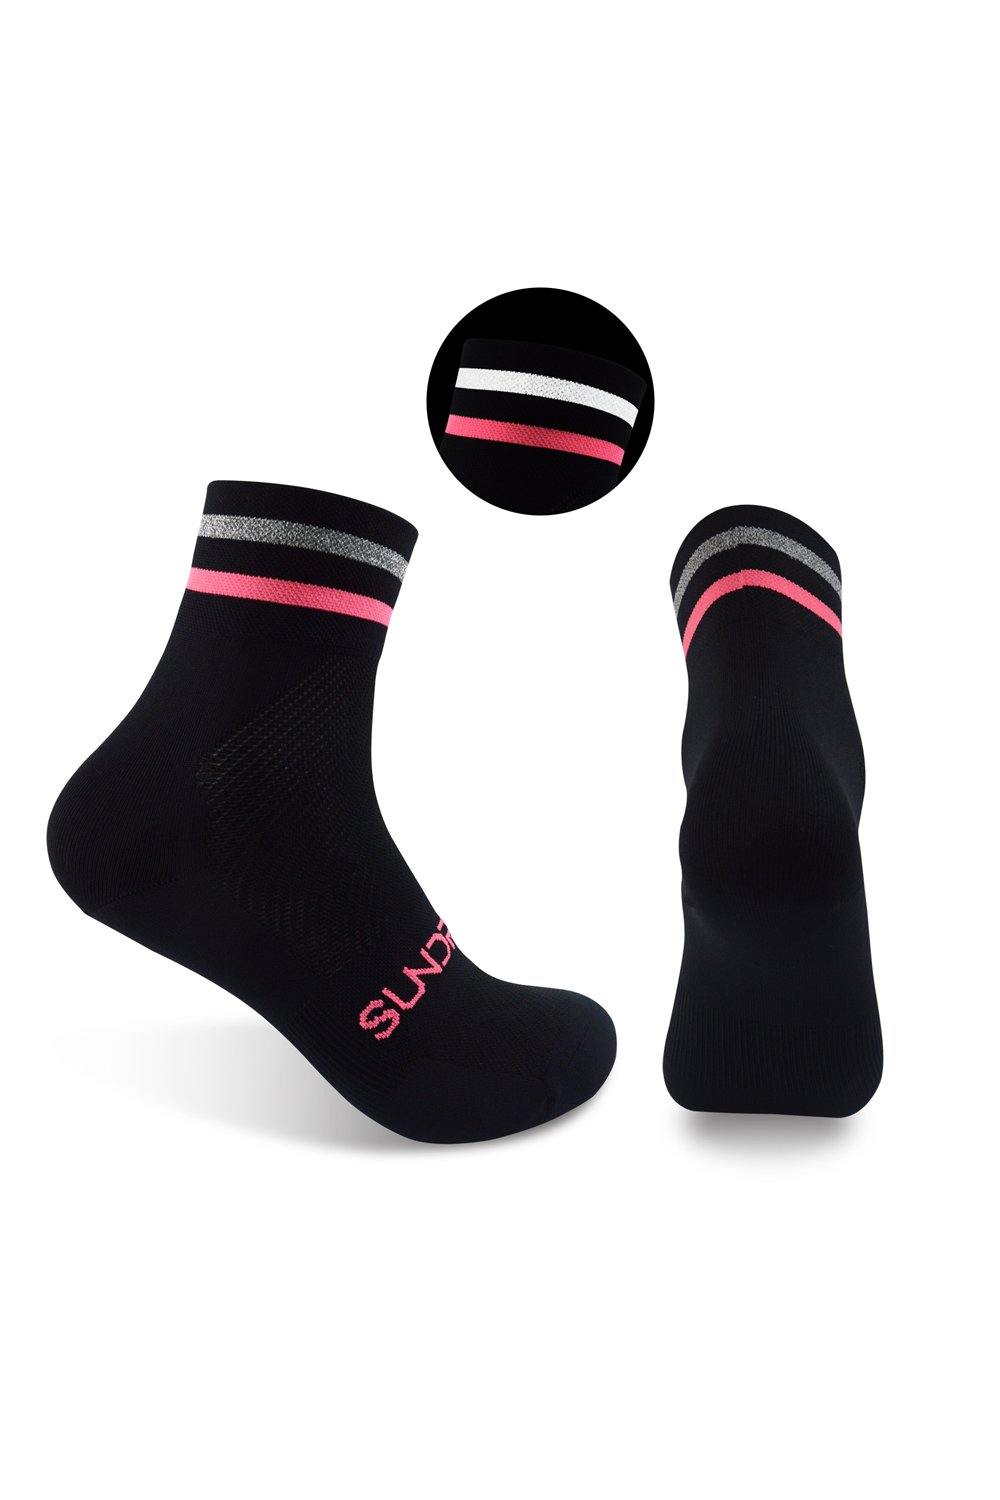 Sundried Cycle Socks Black w Reflective Stripe Socks S/M Black SD0199 SM Black Activewear